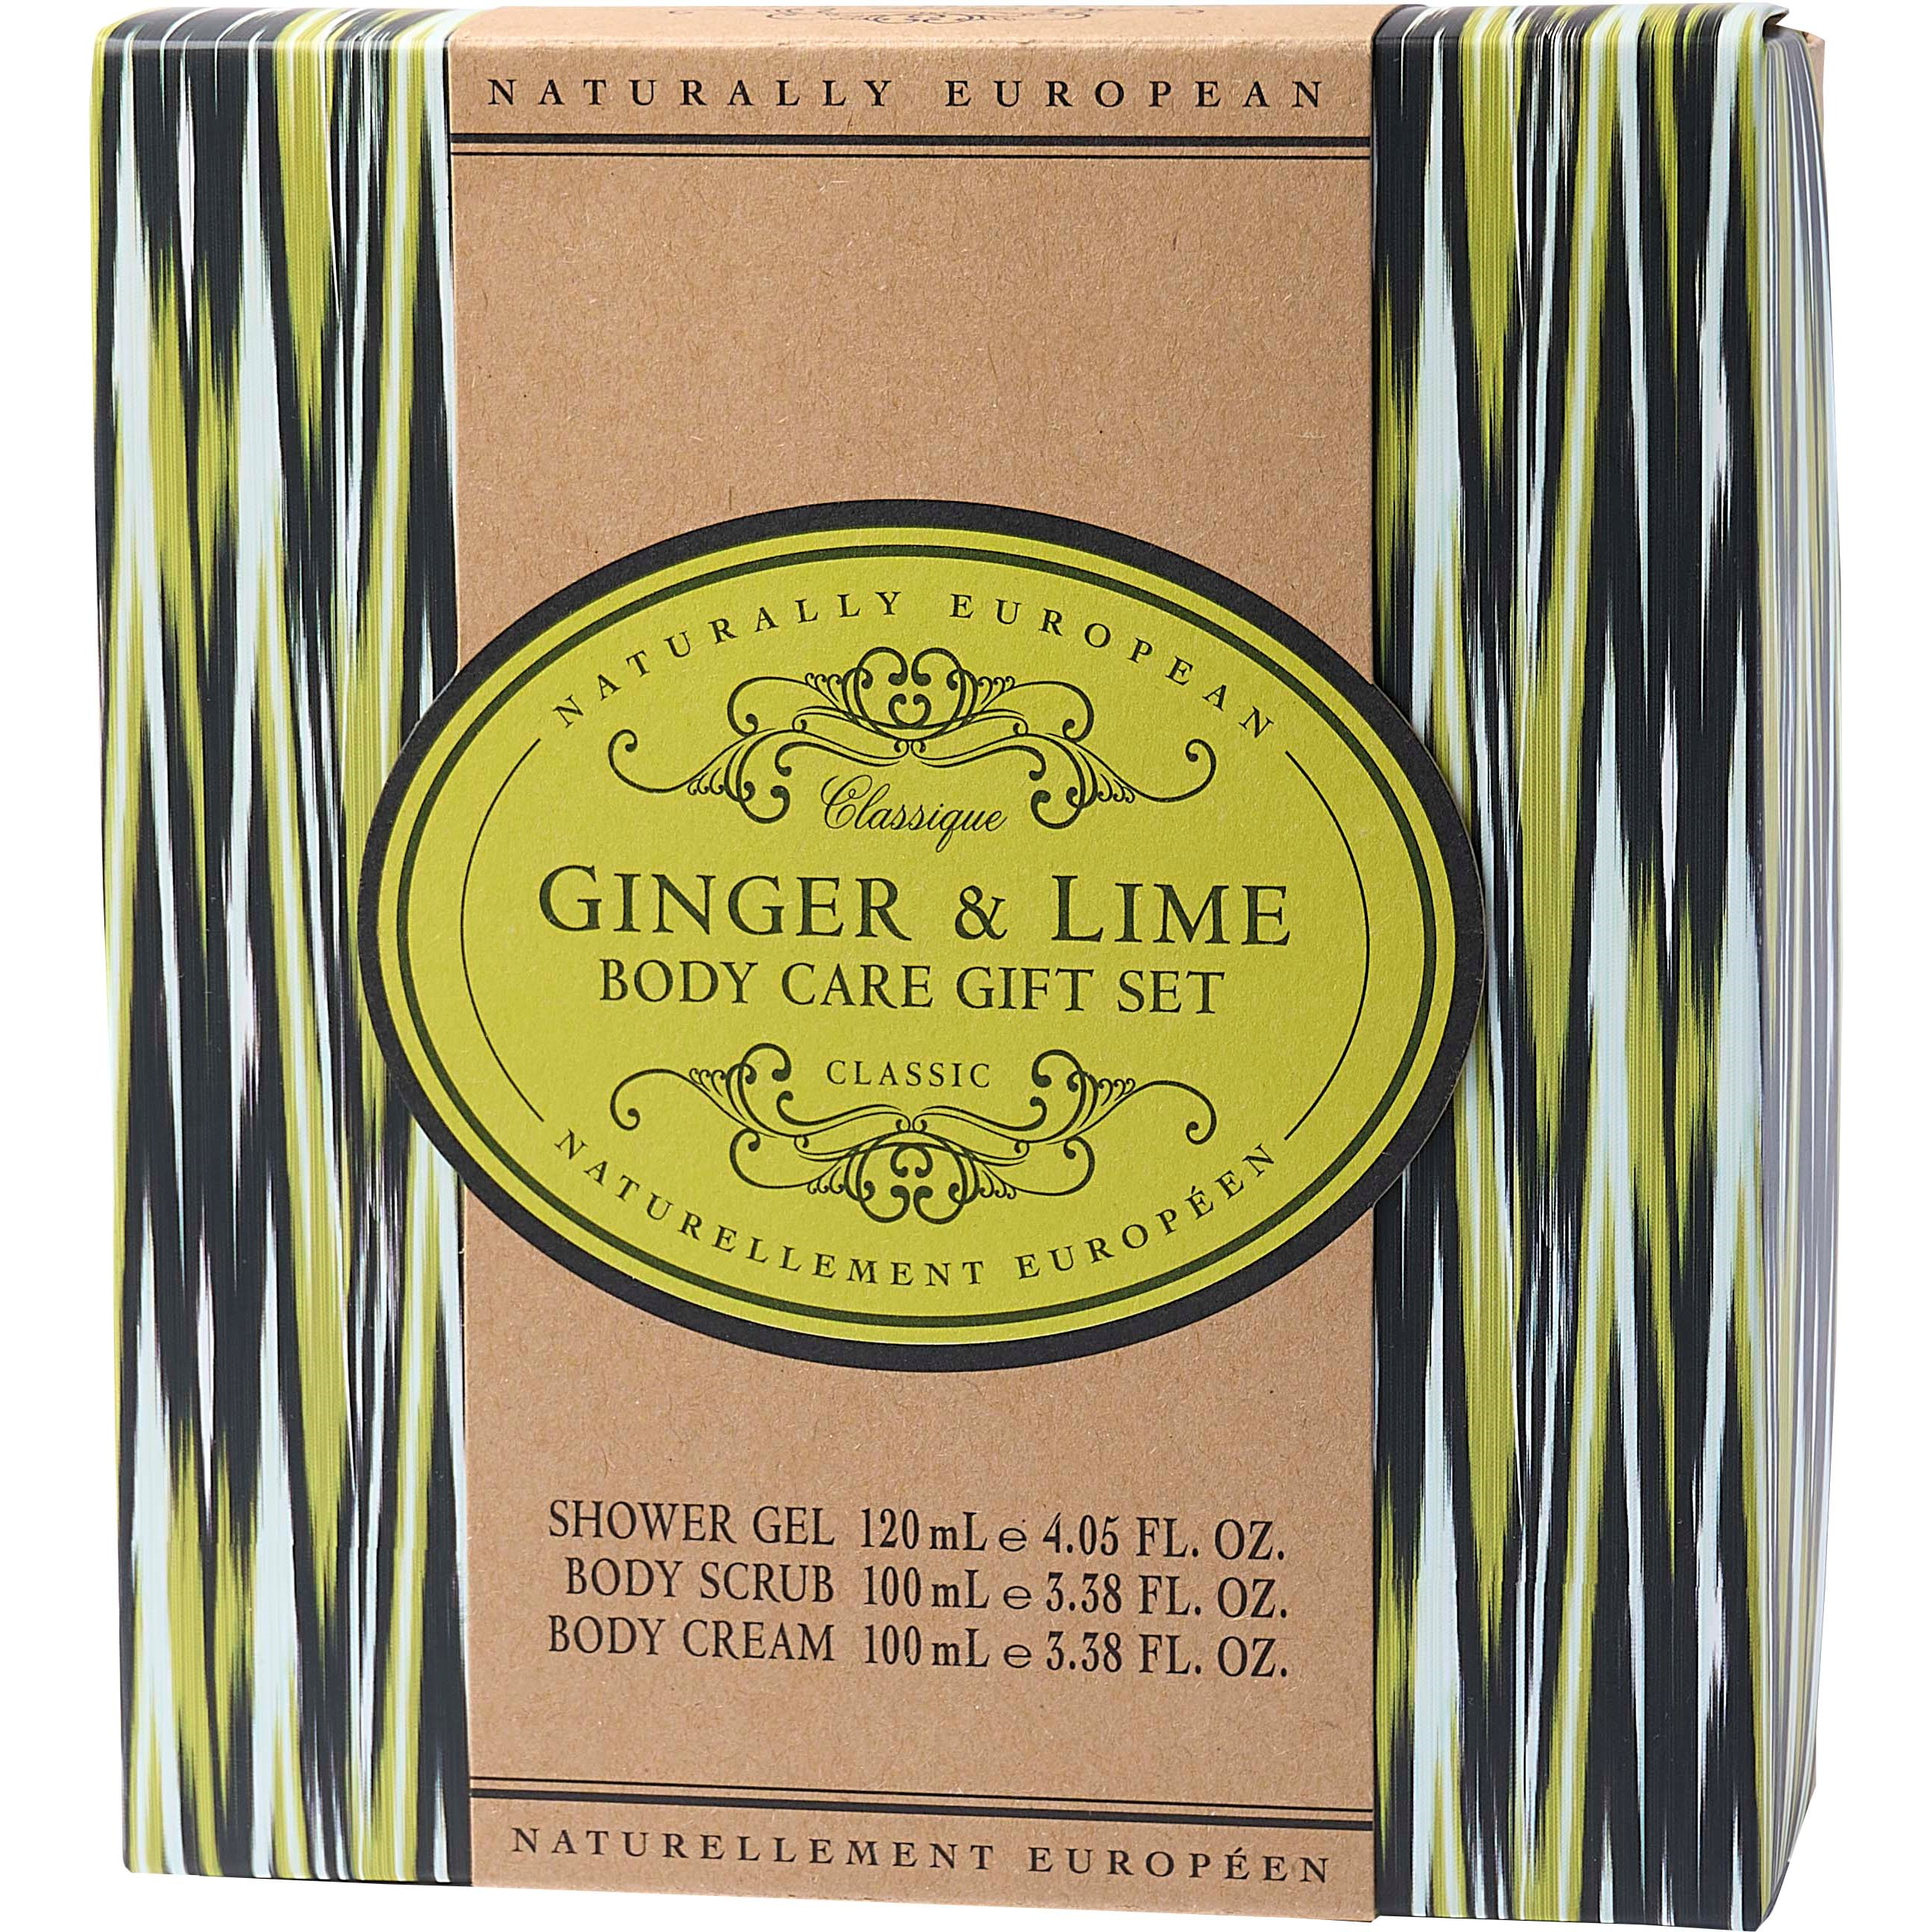 Naturally European Ginger & Lime Body Care Gift Set